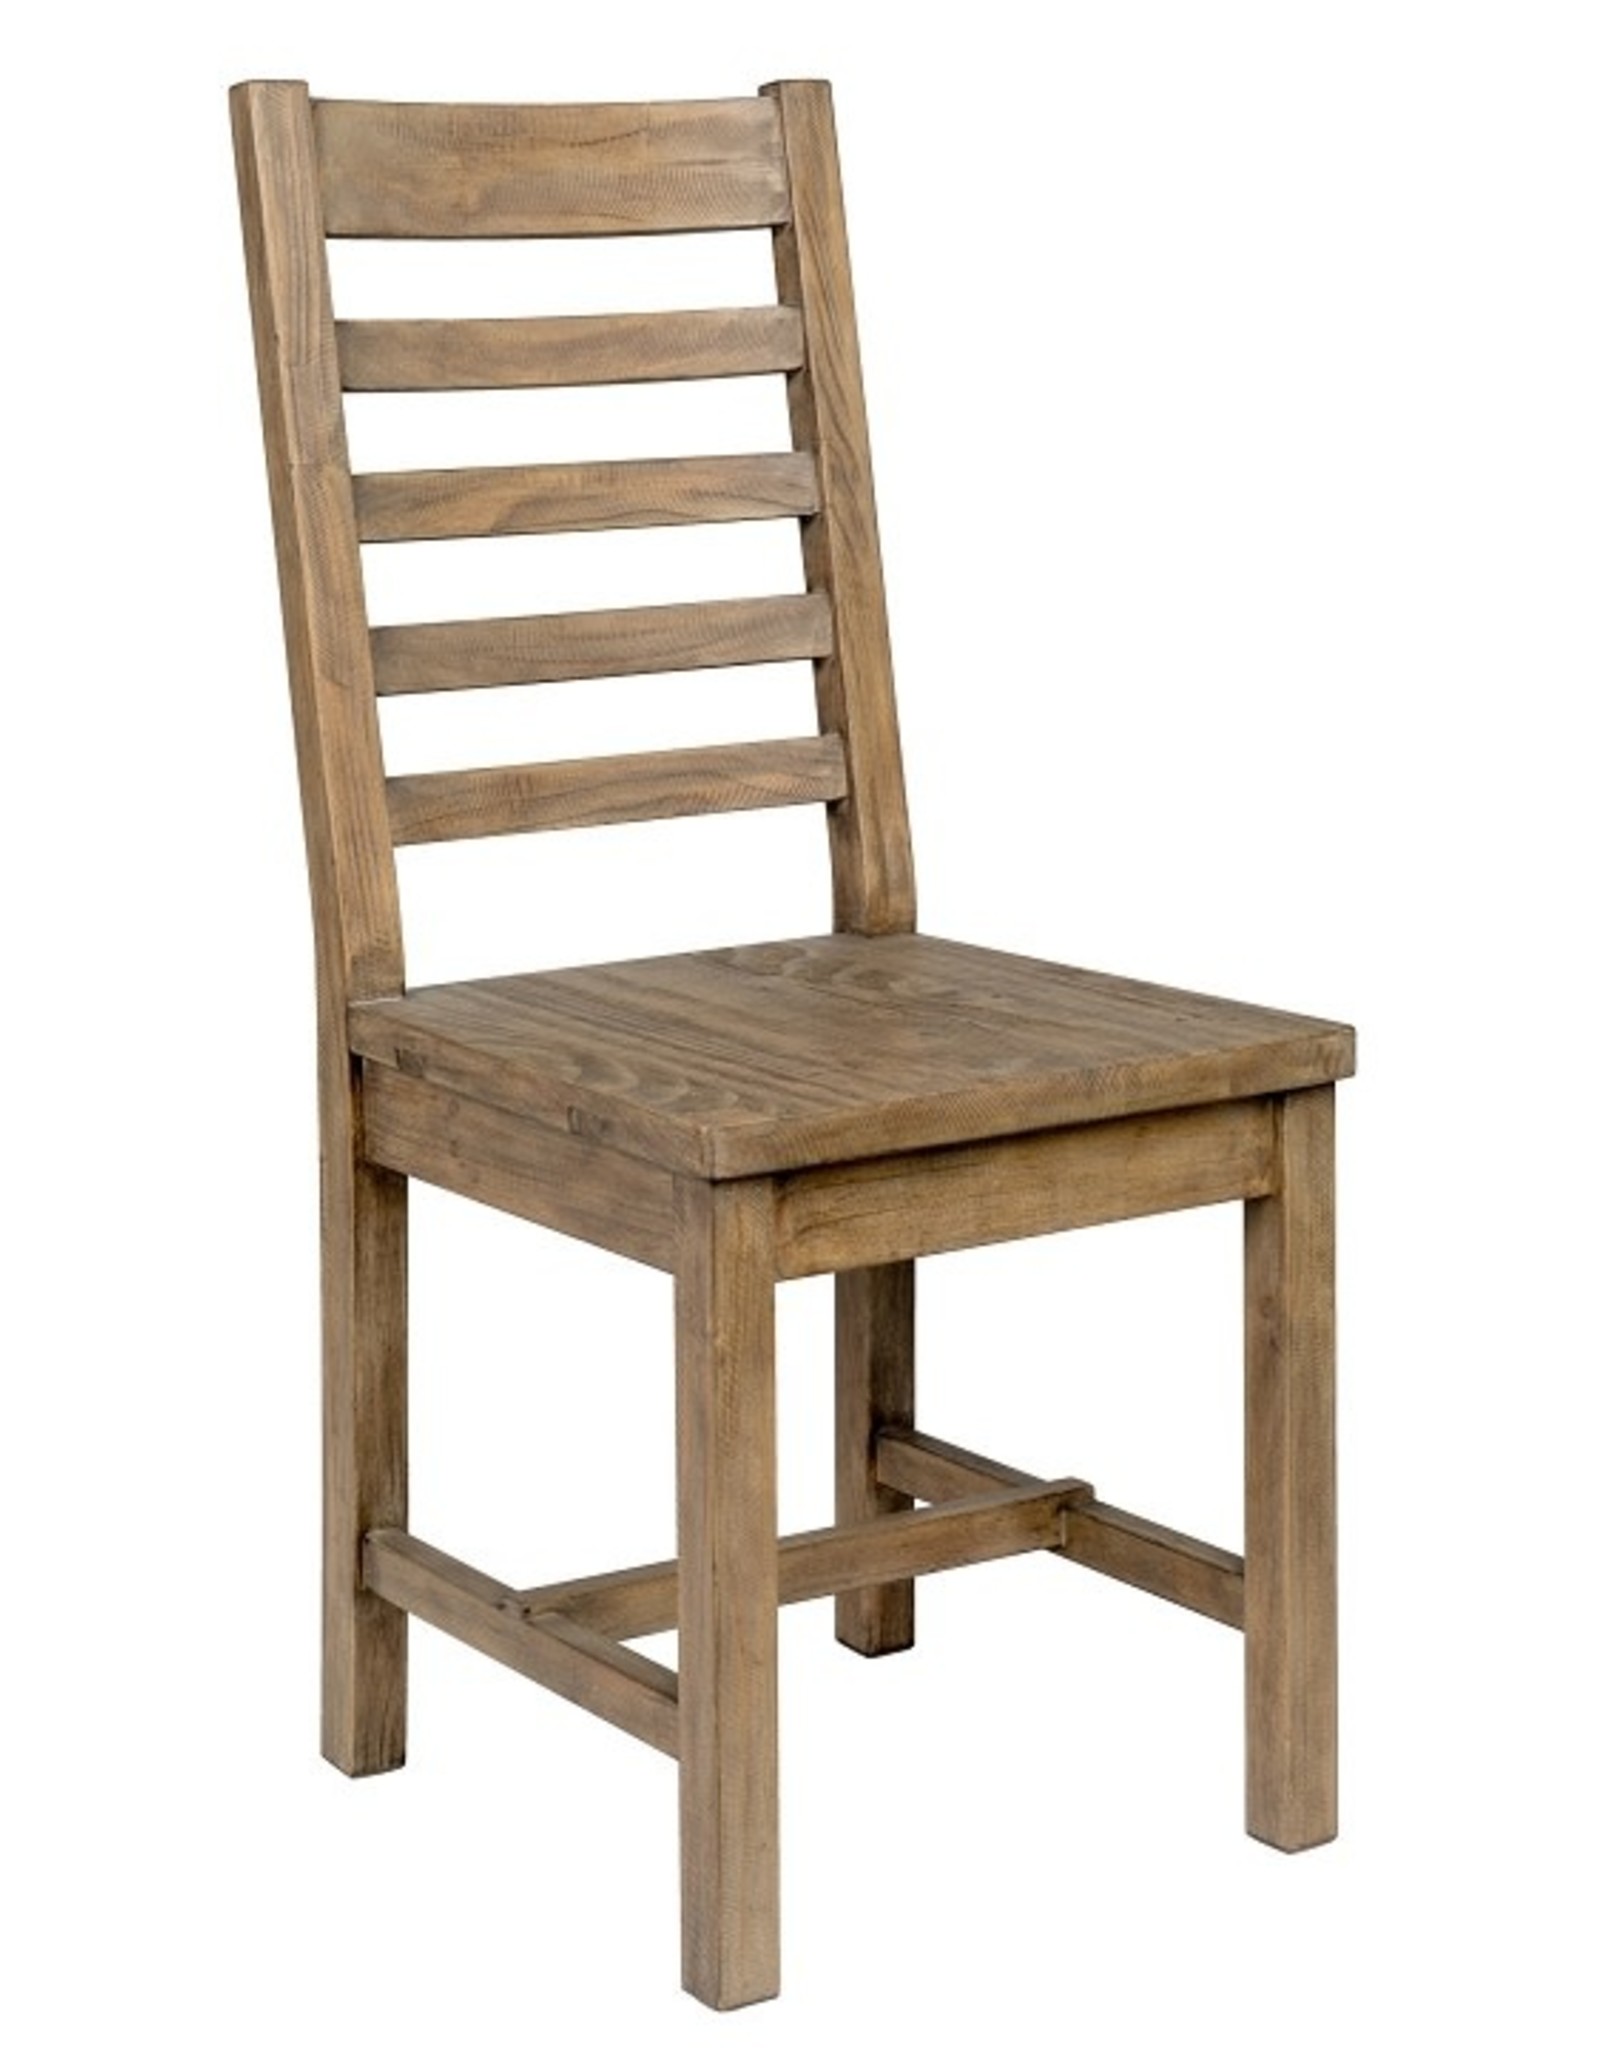 53003789 Caleb Dining Chair Desert Gray